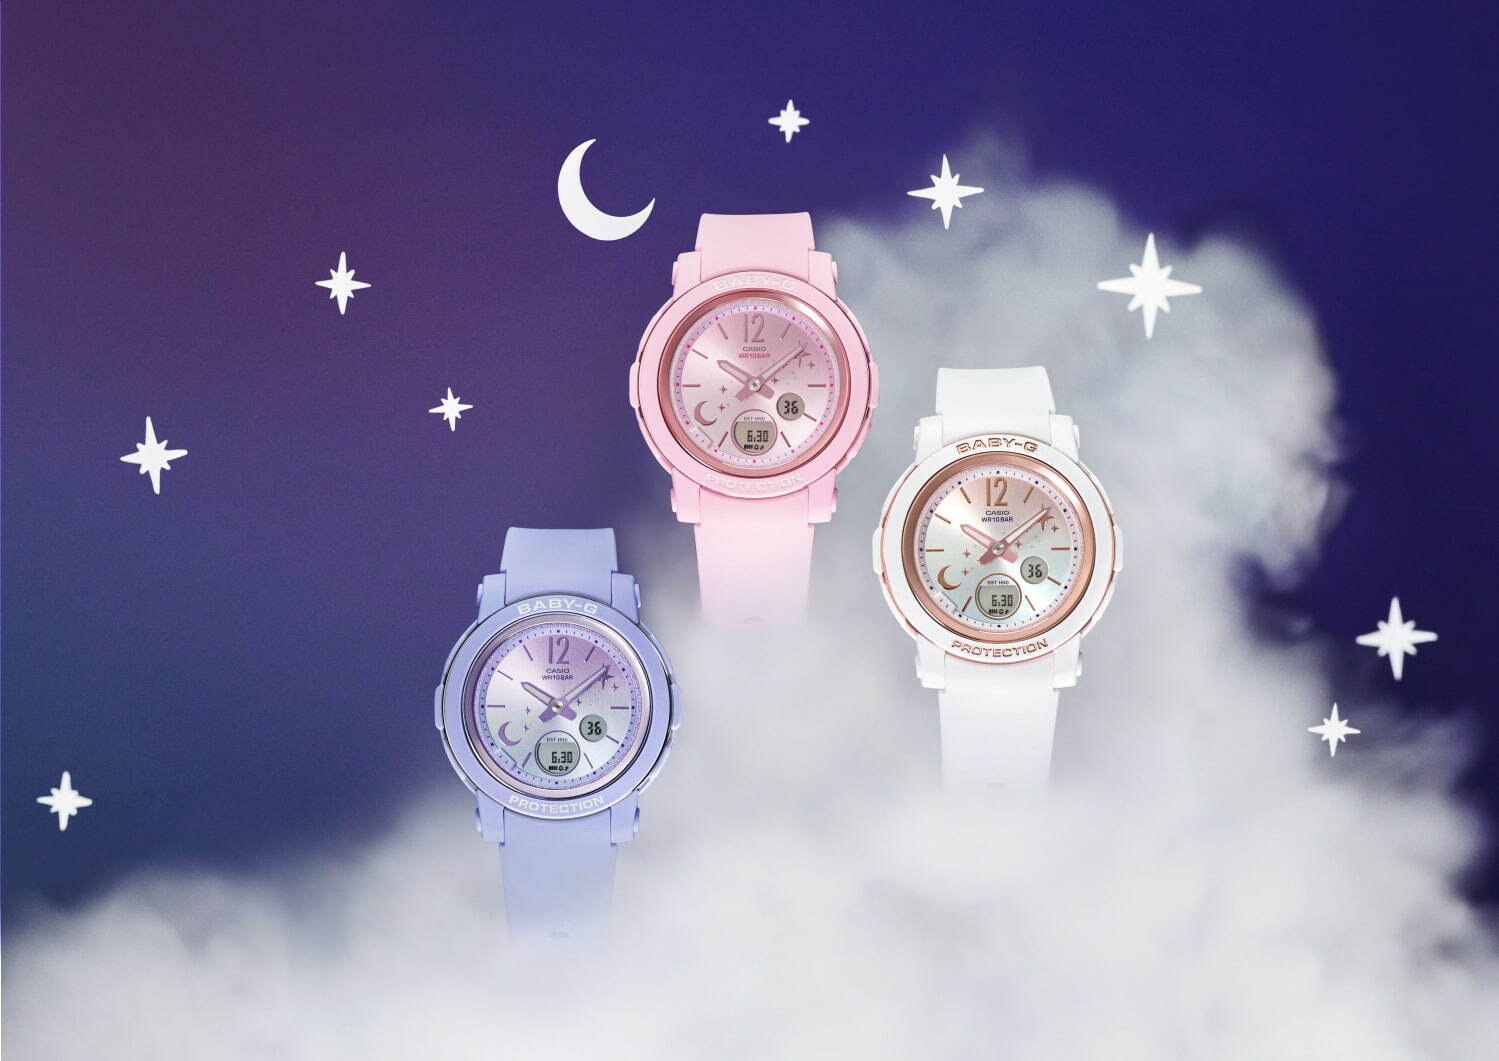 BABY-G“冬の夜空”テーマの新作腕時計、月＆星入りグラデーション文字板